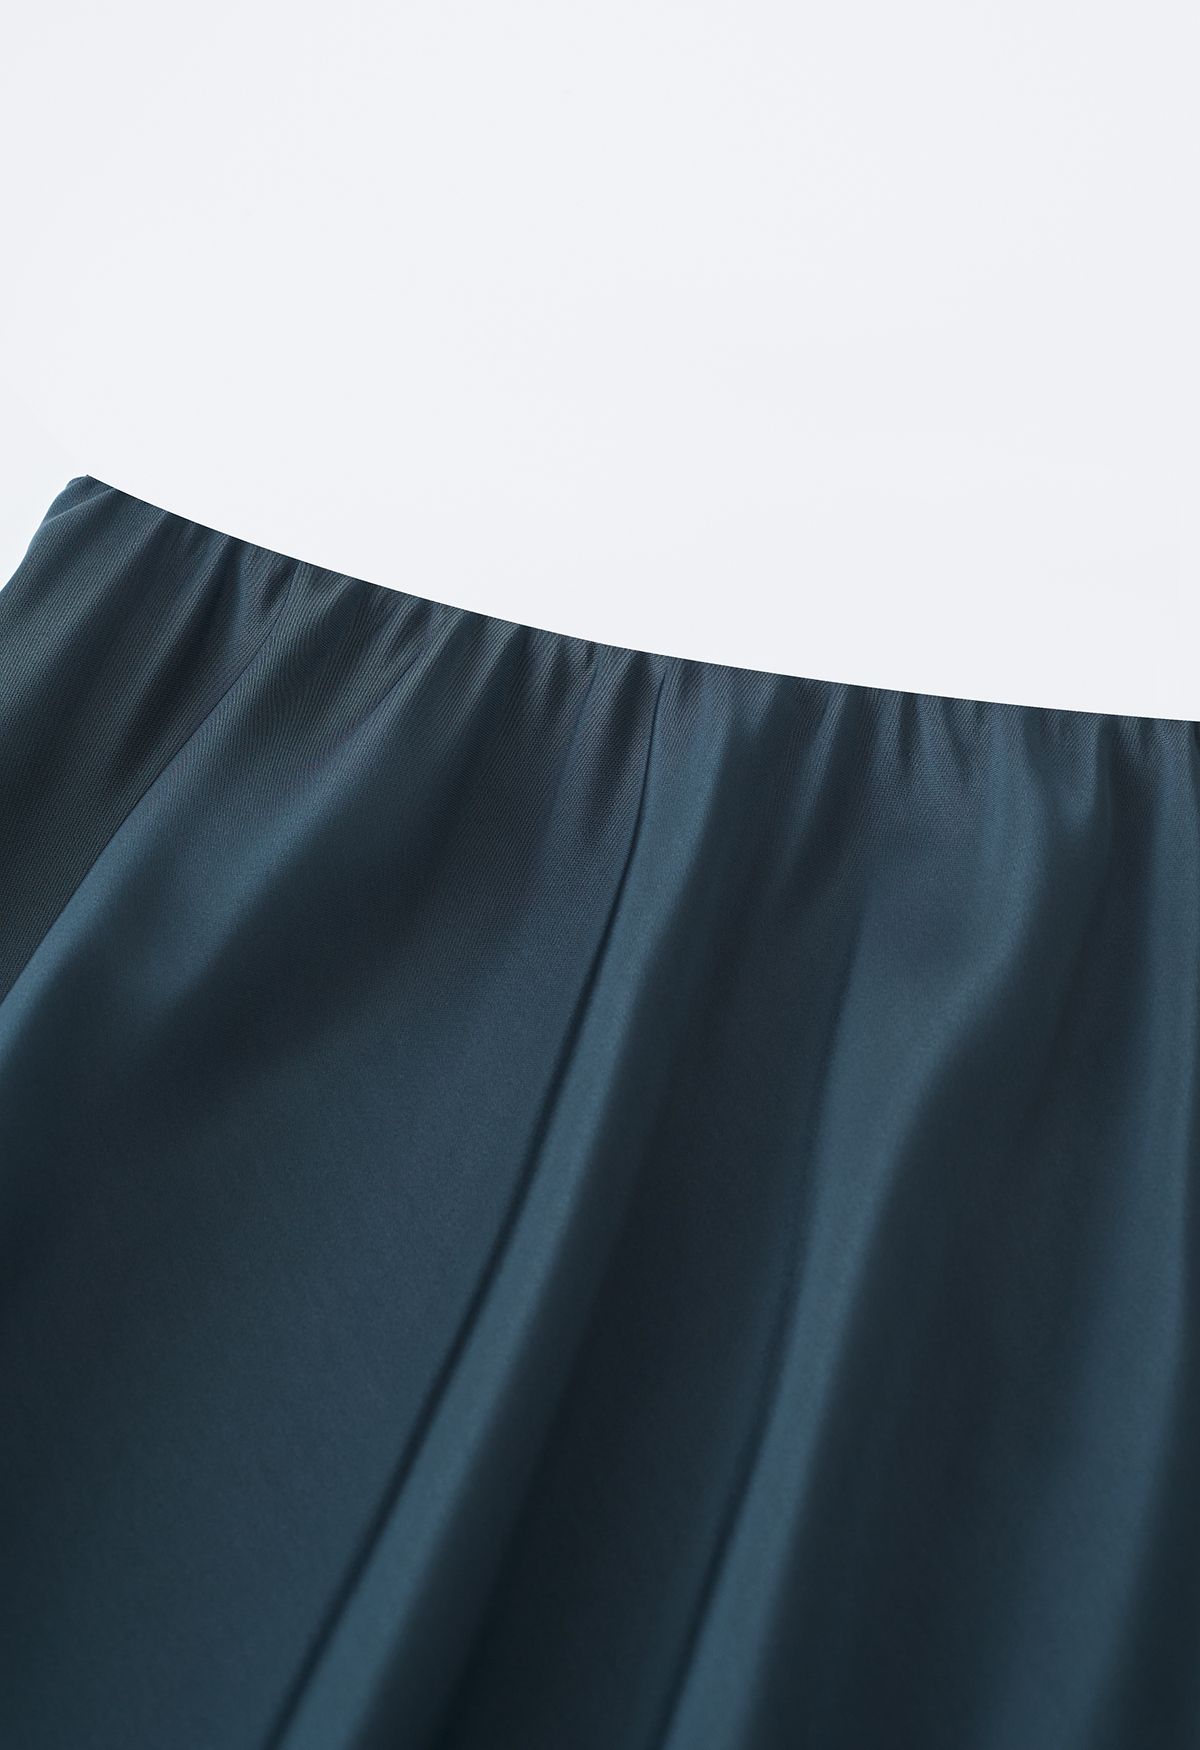 Vent Hem Satin Maxi Skirt in Dusty Blue